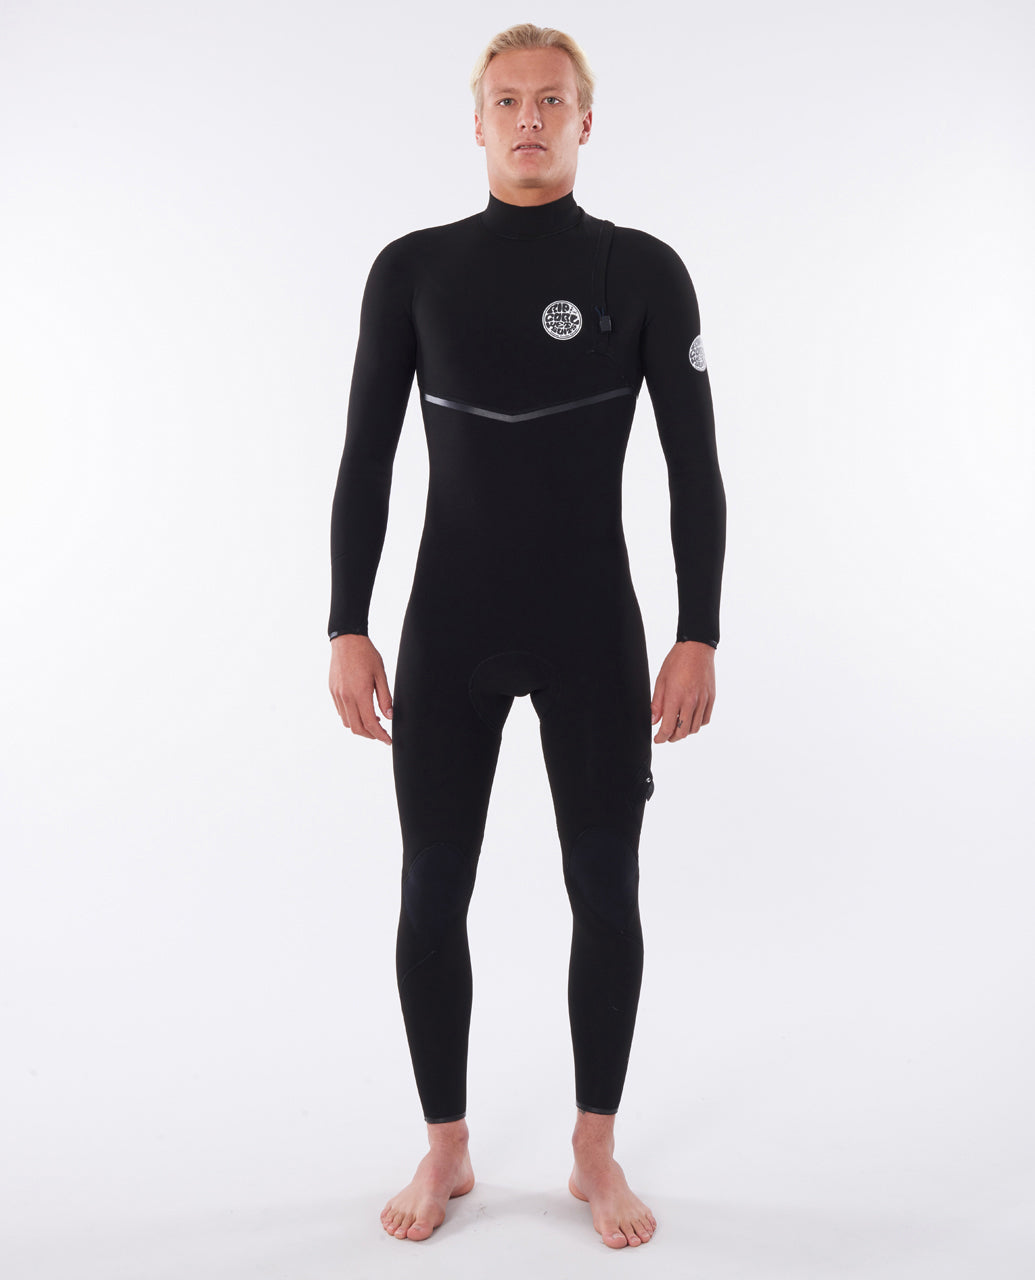 [SALE] [Spring/Autumn] Men's E BOMB 3/2mm Zip Free Full Suit Wetsuit